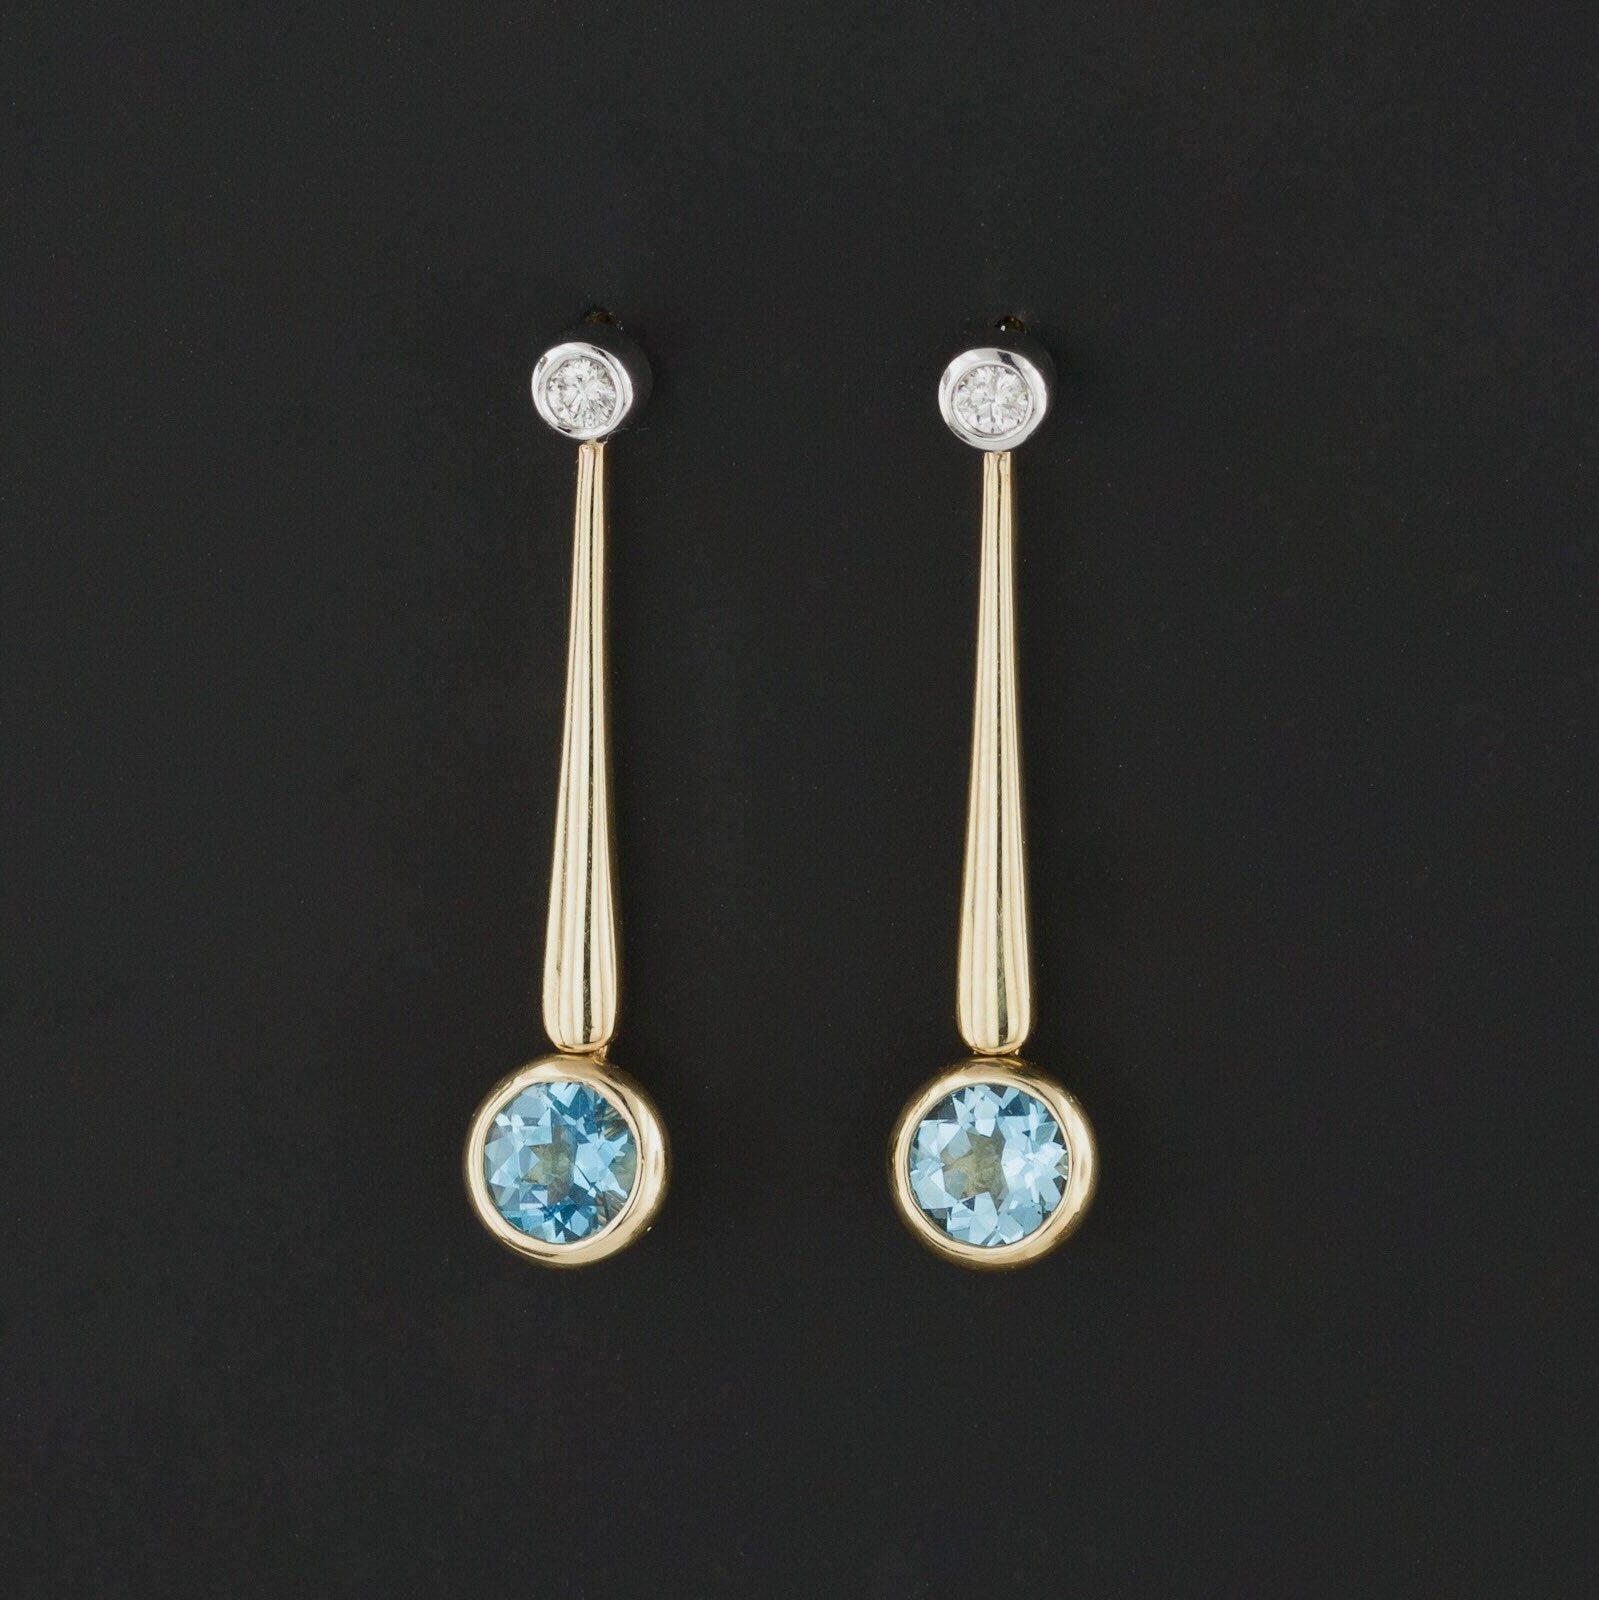 Vintage Blue Topaz and Diamond Earrings of 14k Gold